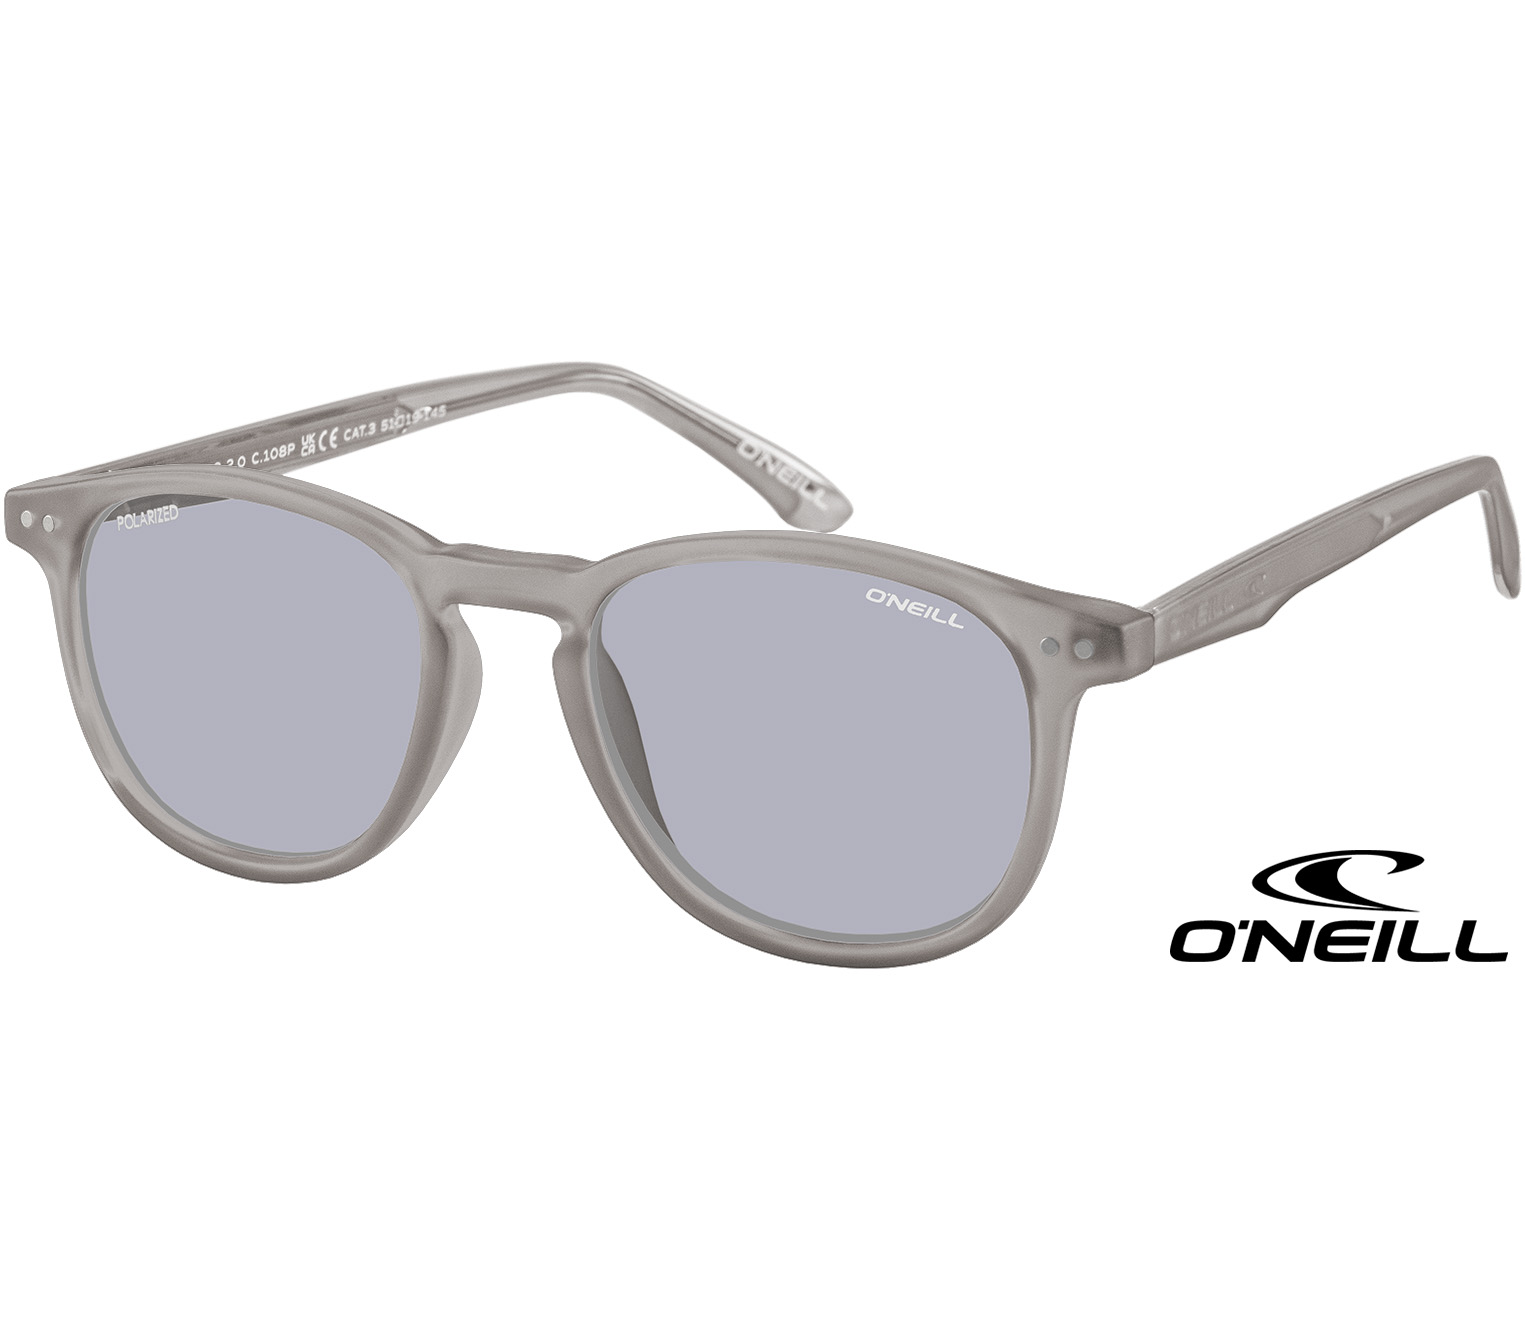 Main Image (Angle) - Summit (Grey) Retro Sunglasses